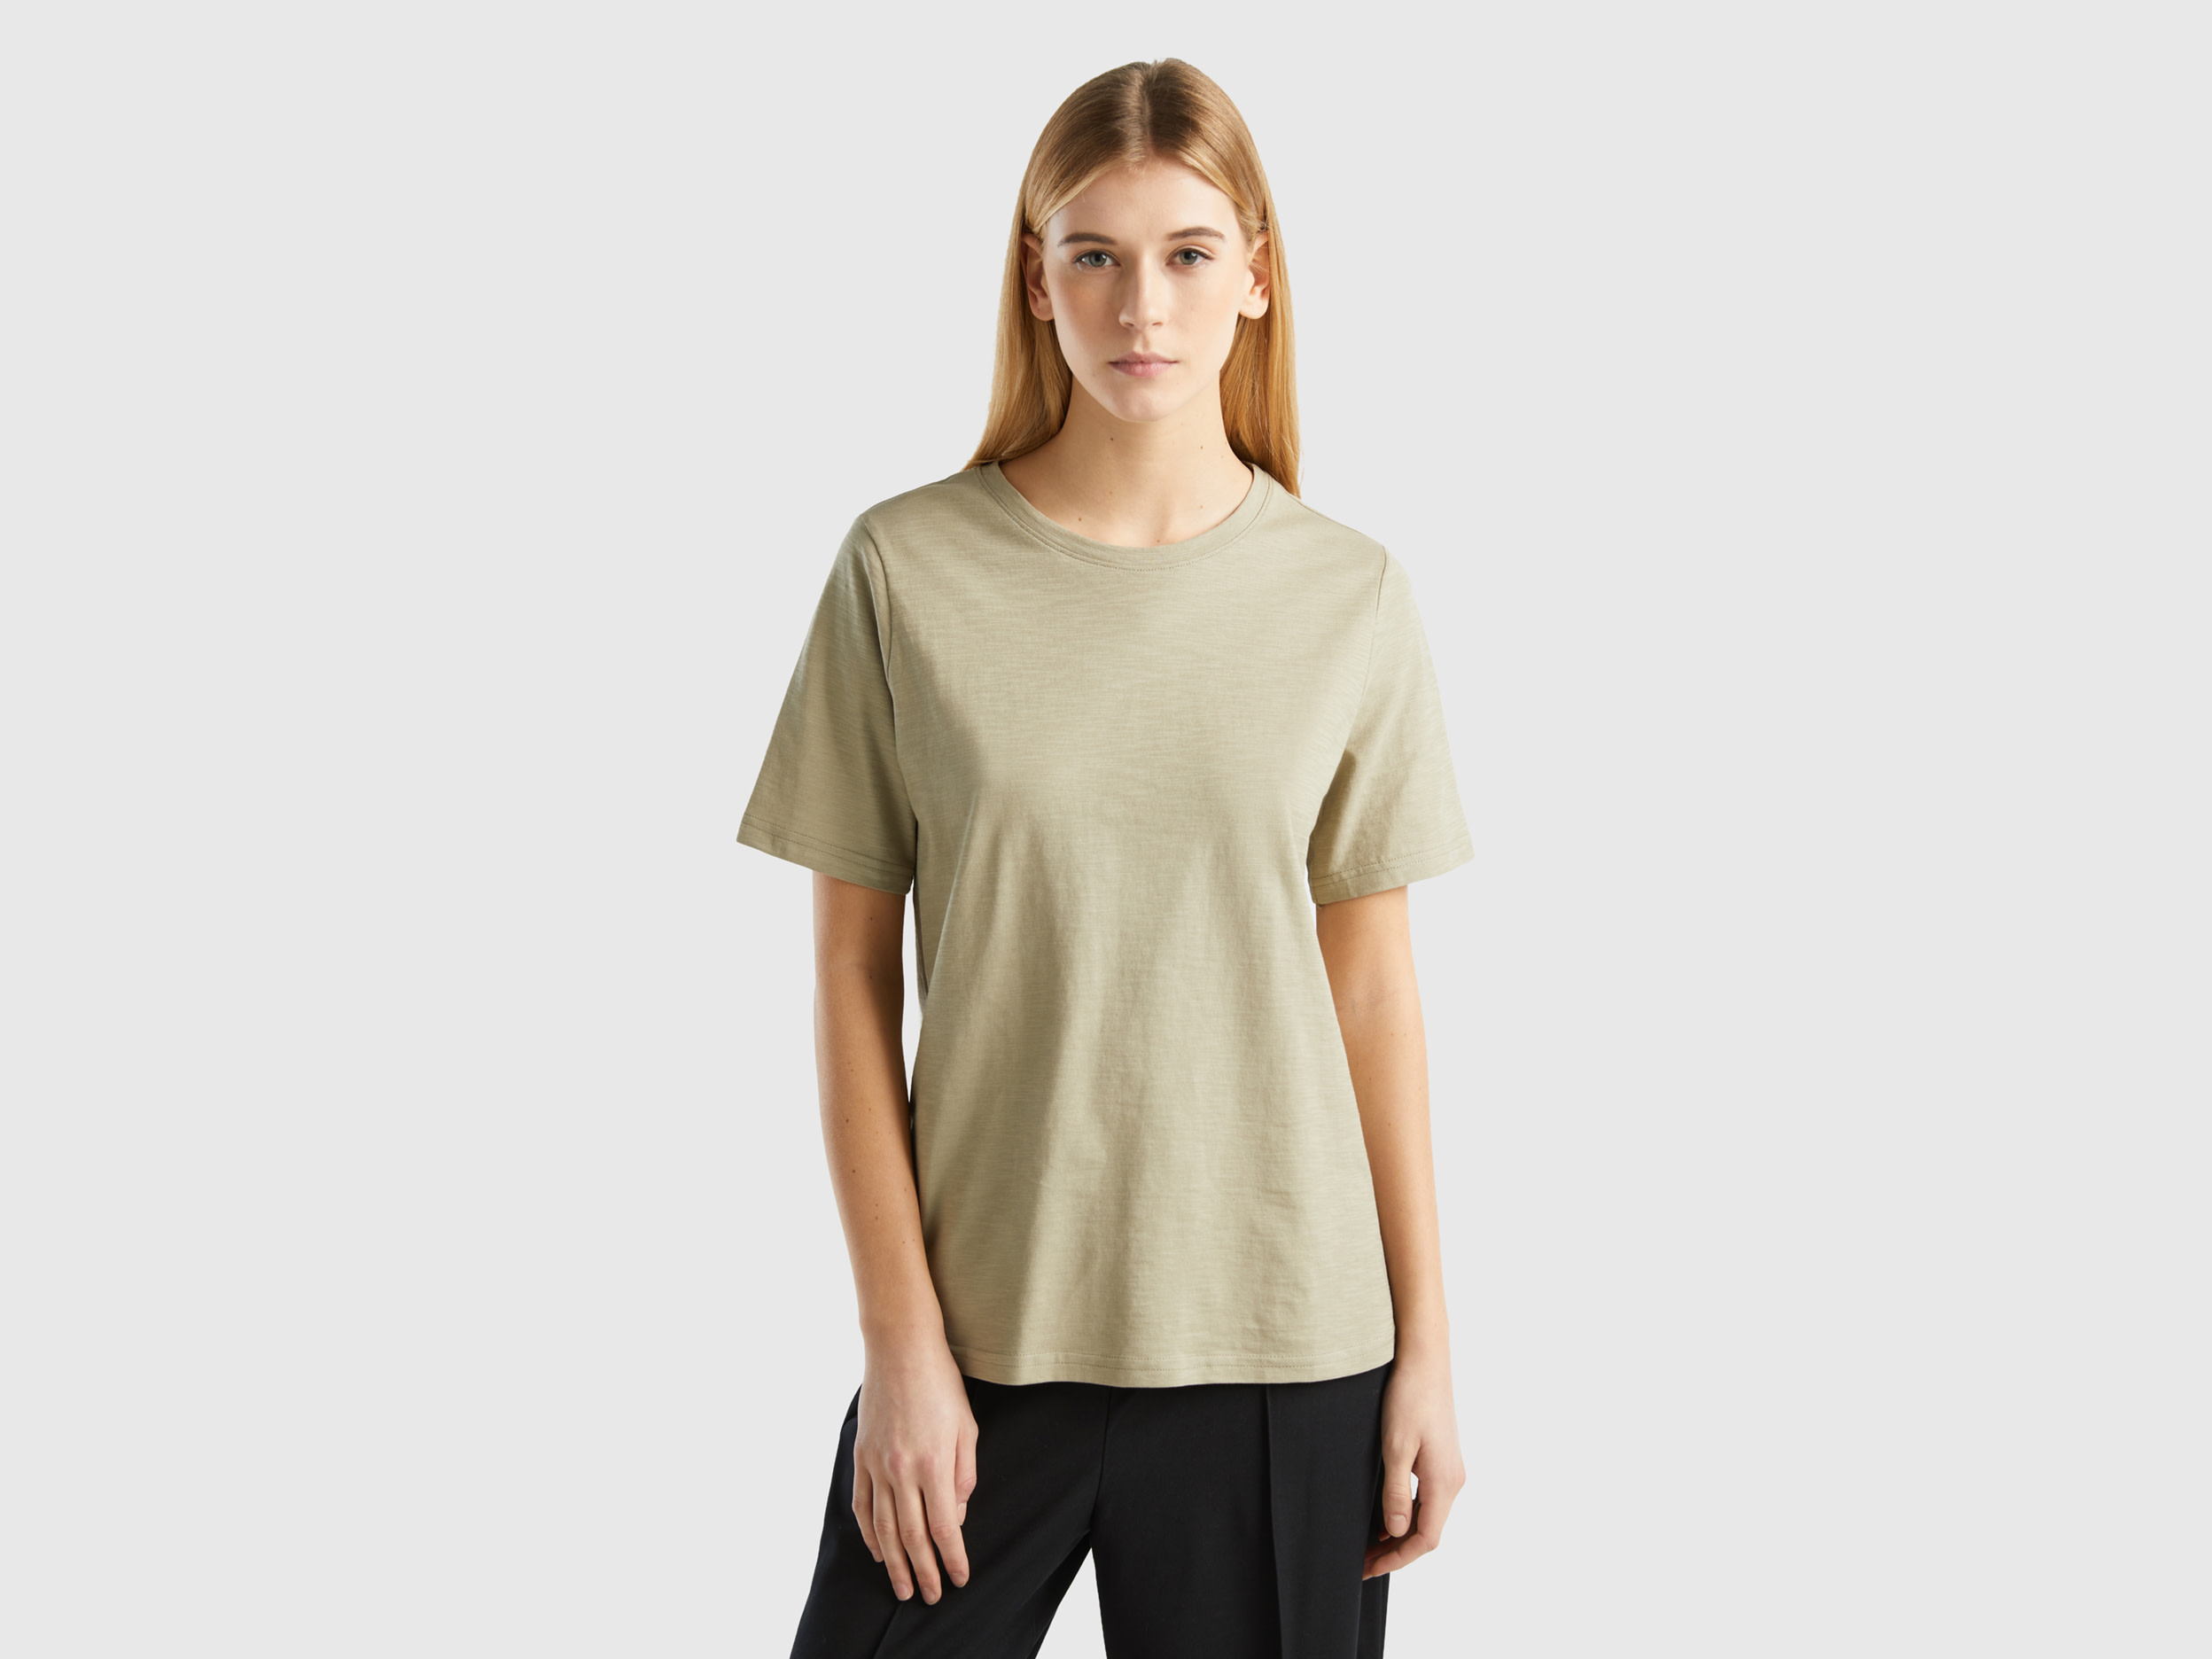 Benetton, Crew Neck T-shirt In Slub Cotton, size XL, Light Green, Women